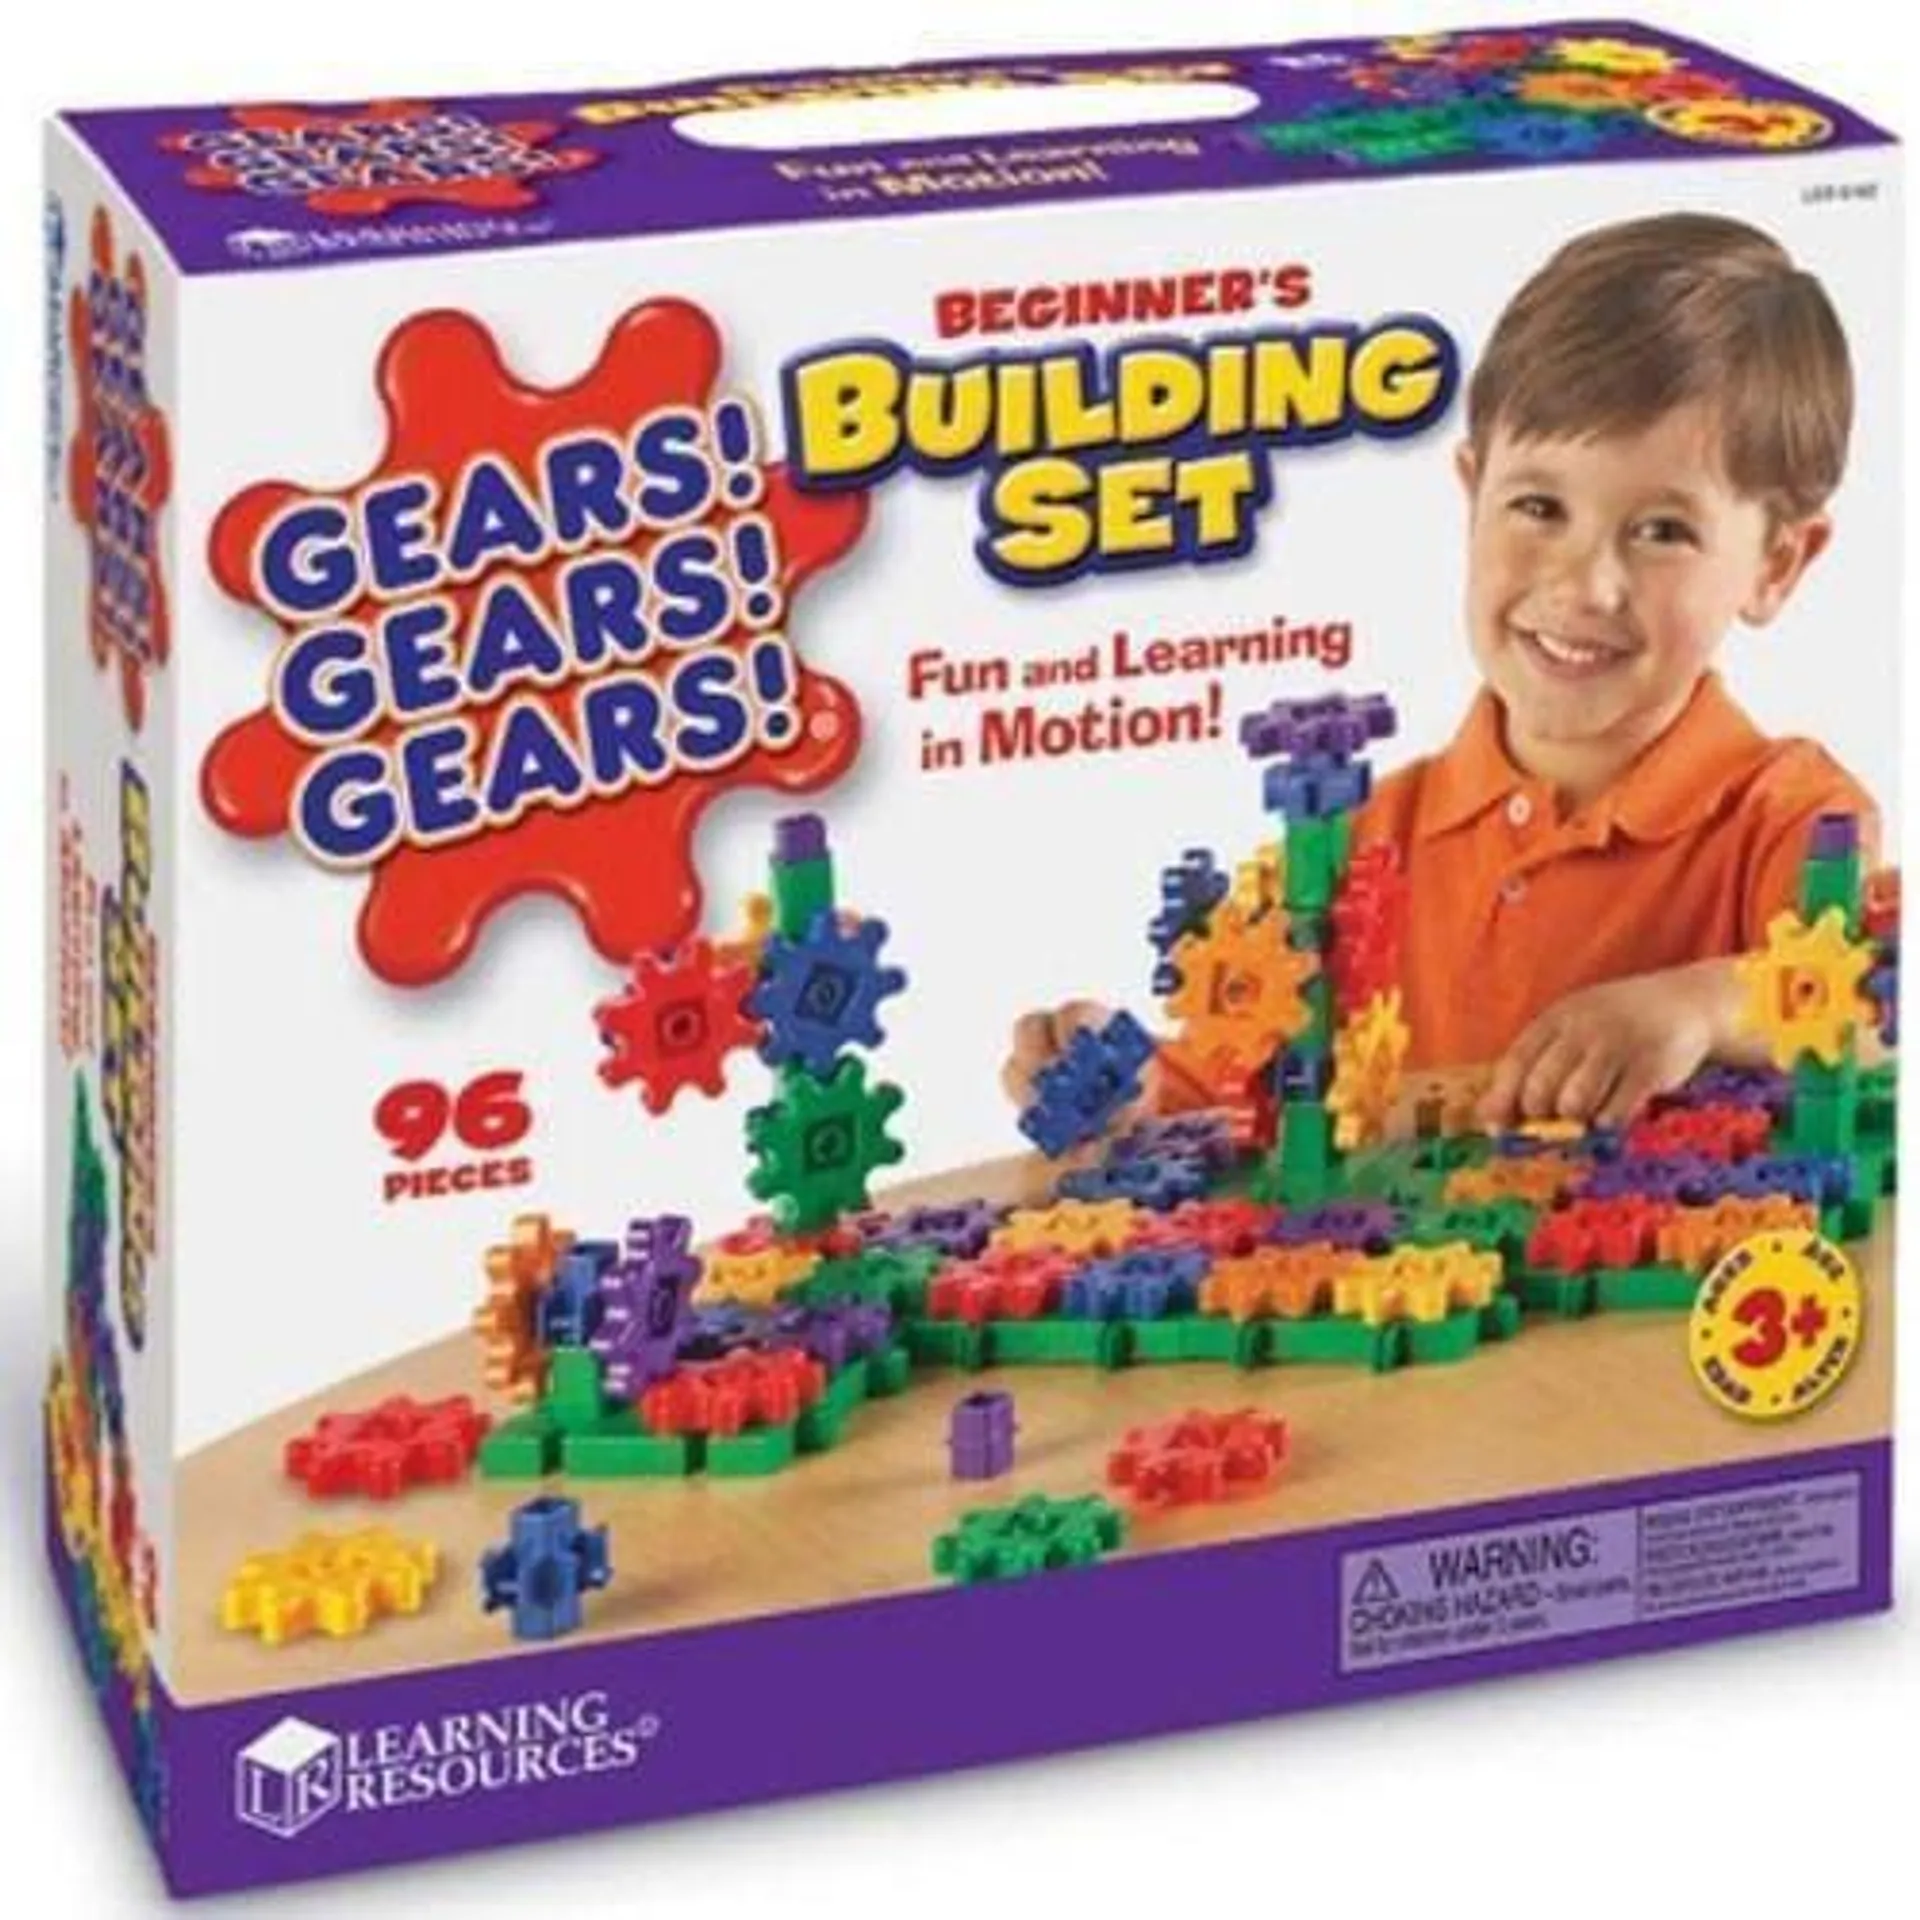 Learning Resources Gears! Gears! Gears! Beginner's Building Set